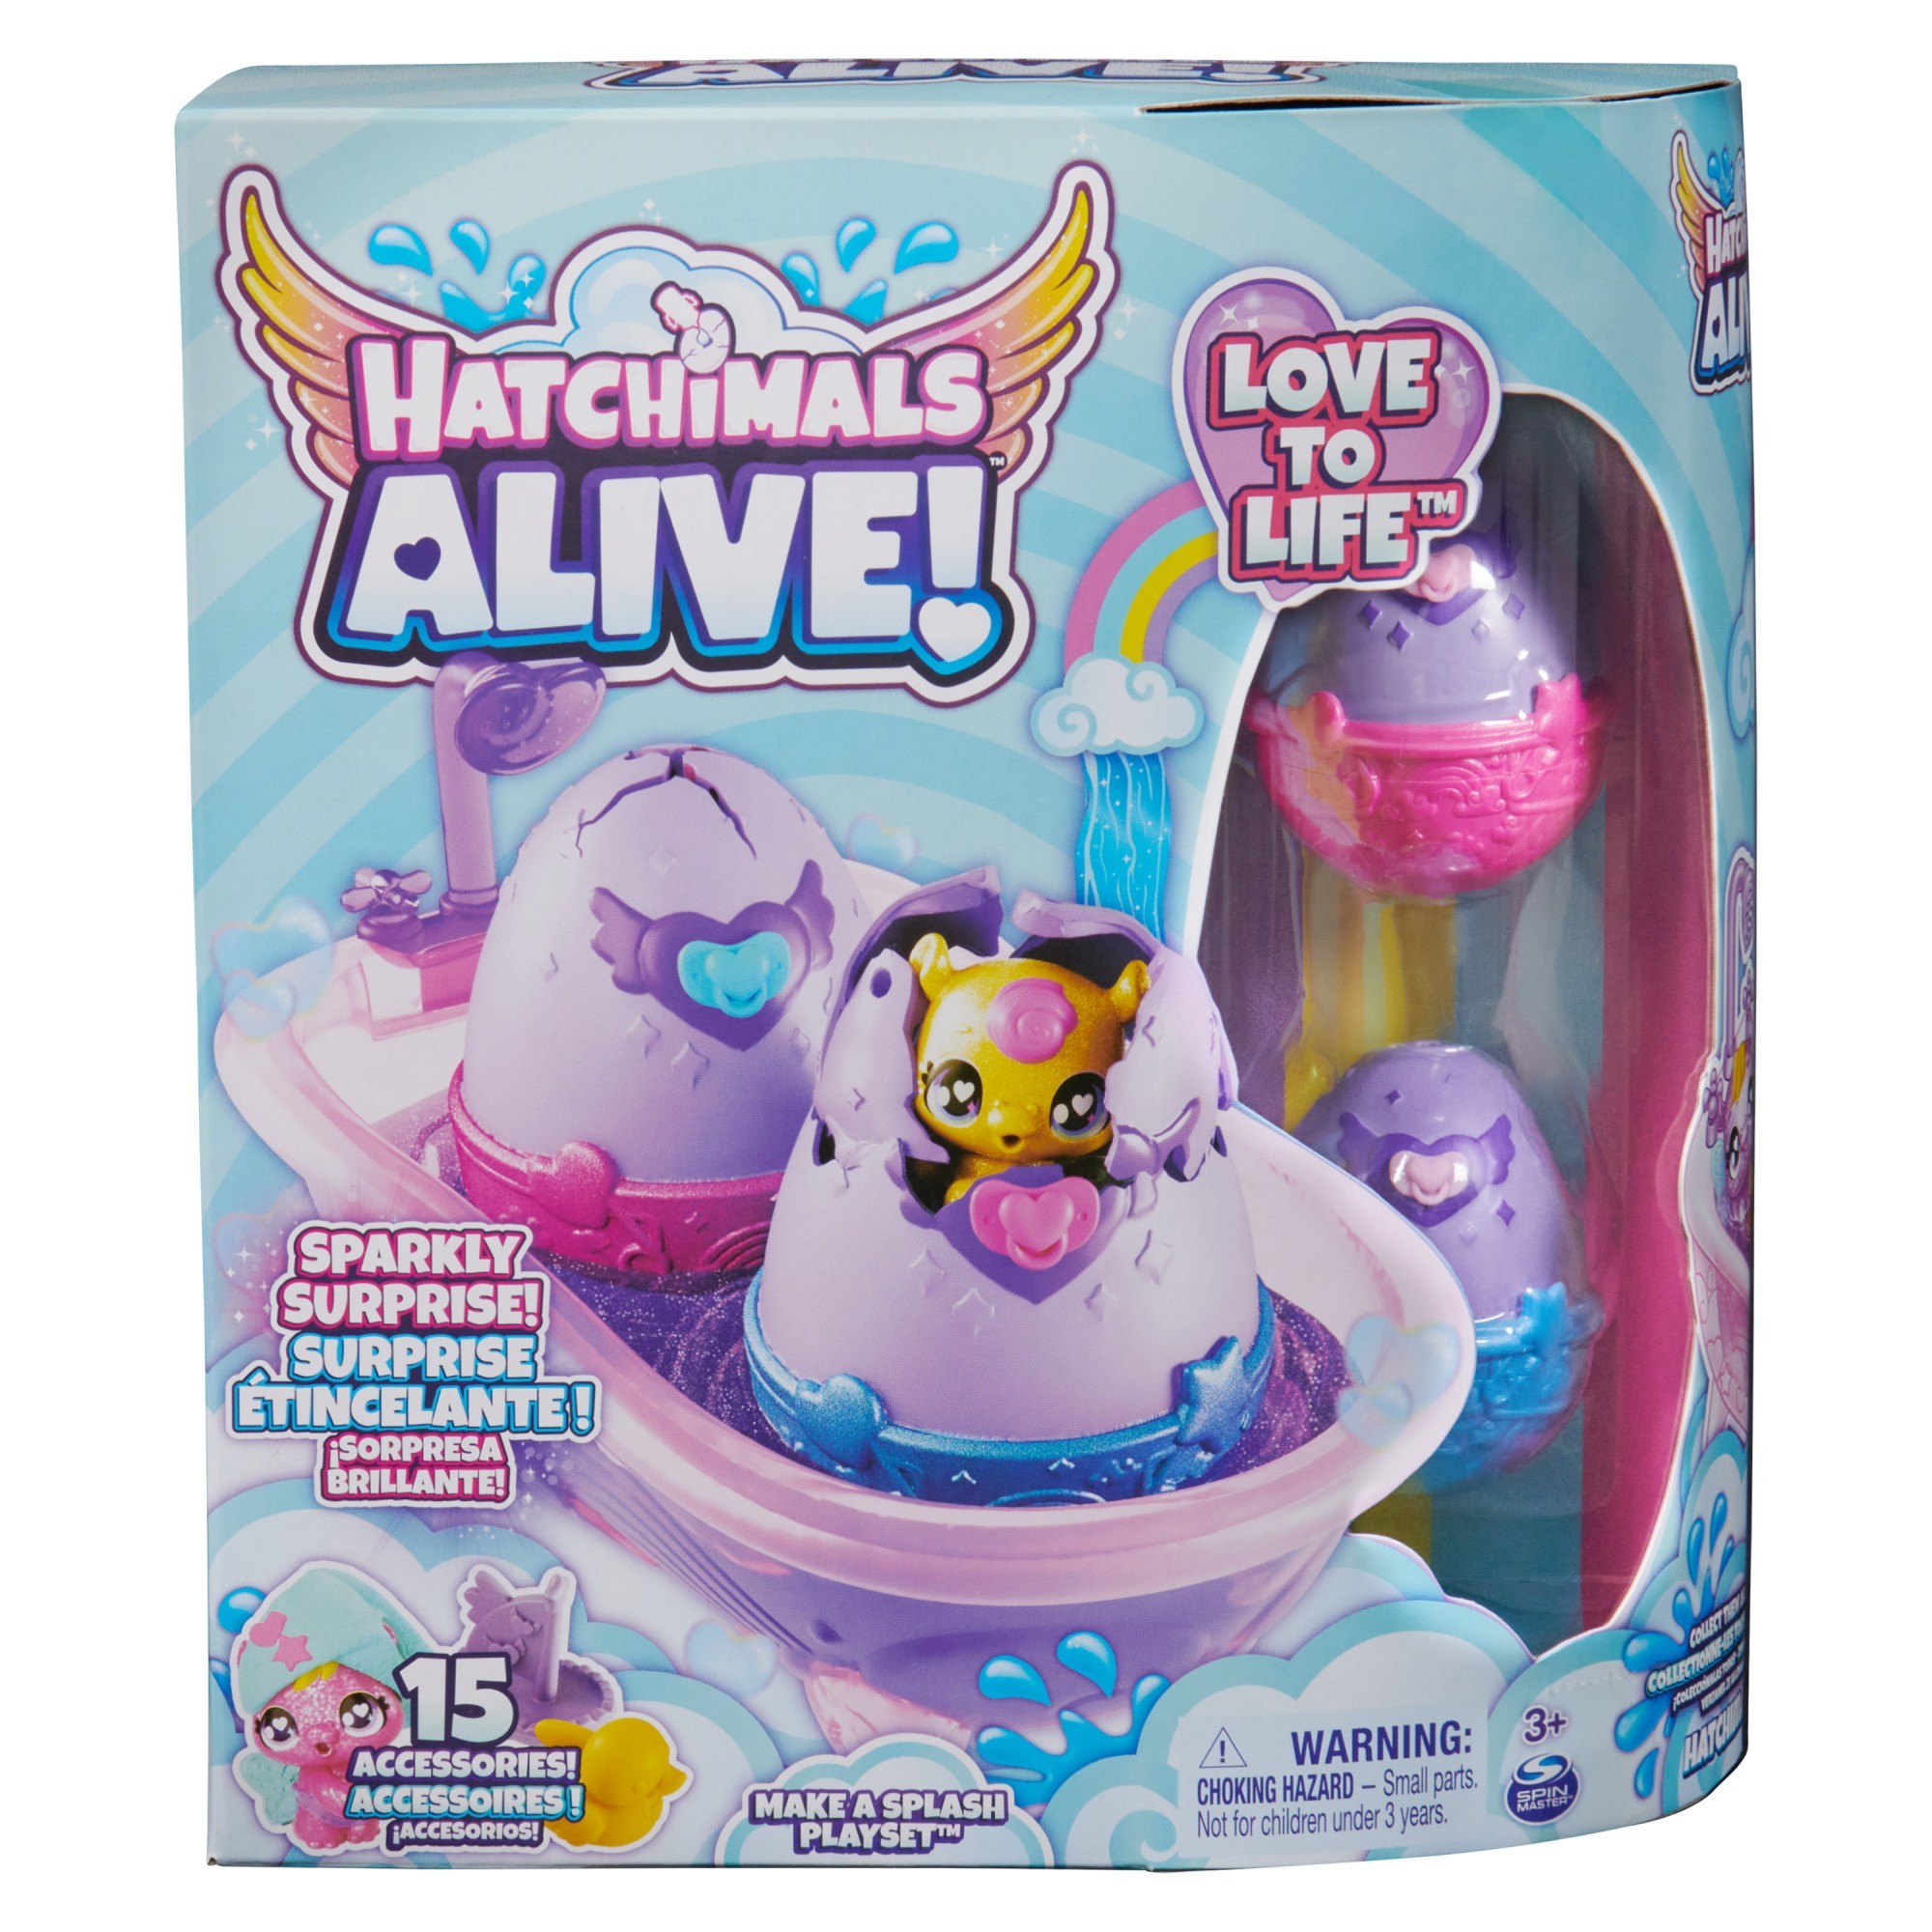 Hatchimals Alive! Make A Splash Playset - WHB Malaysia